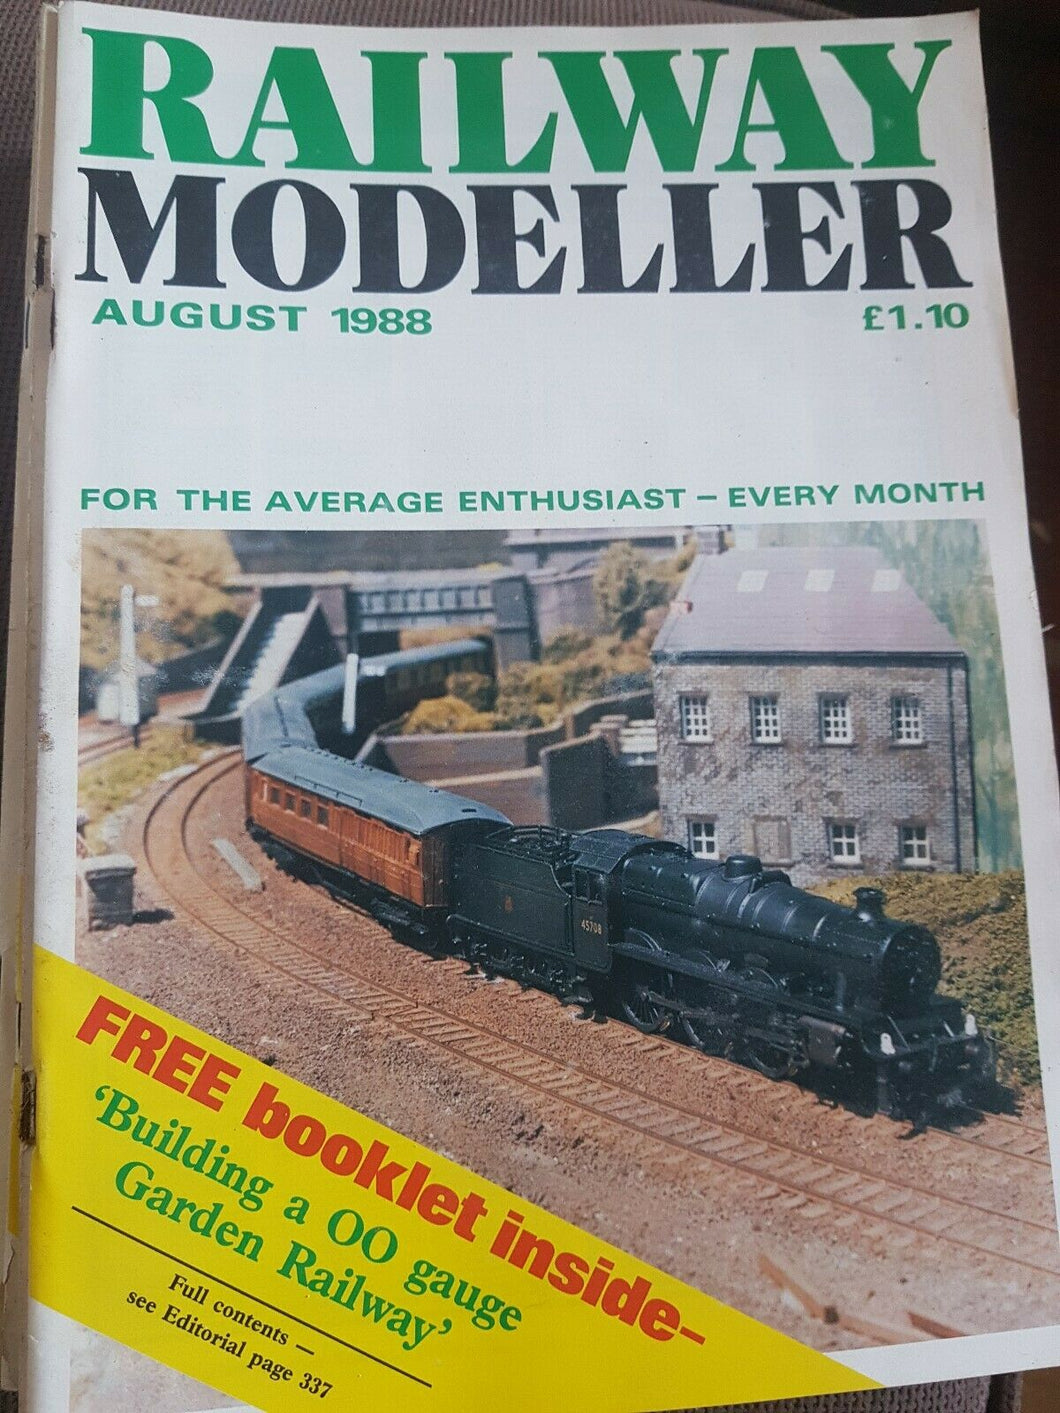 Railway modeller magazine August 1988